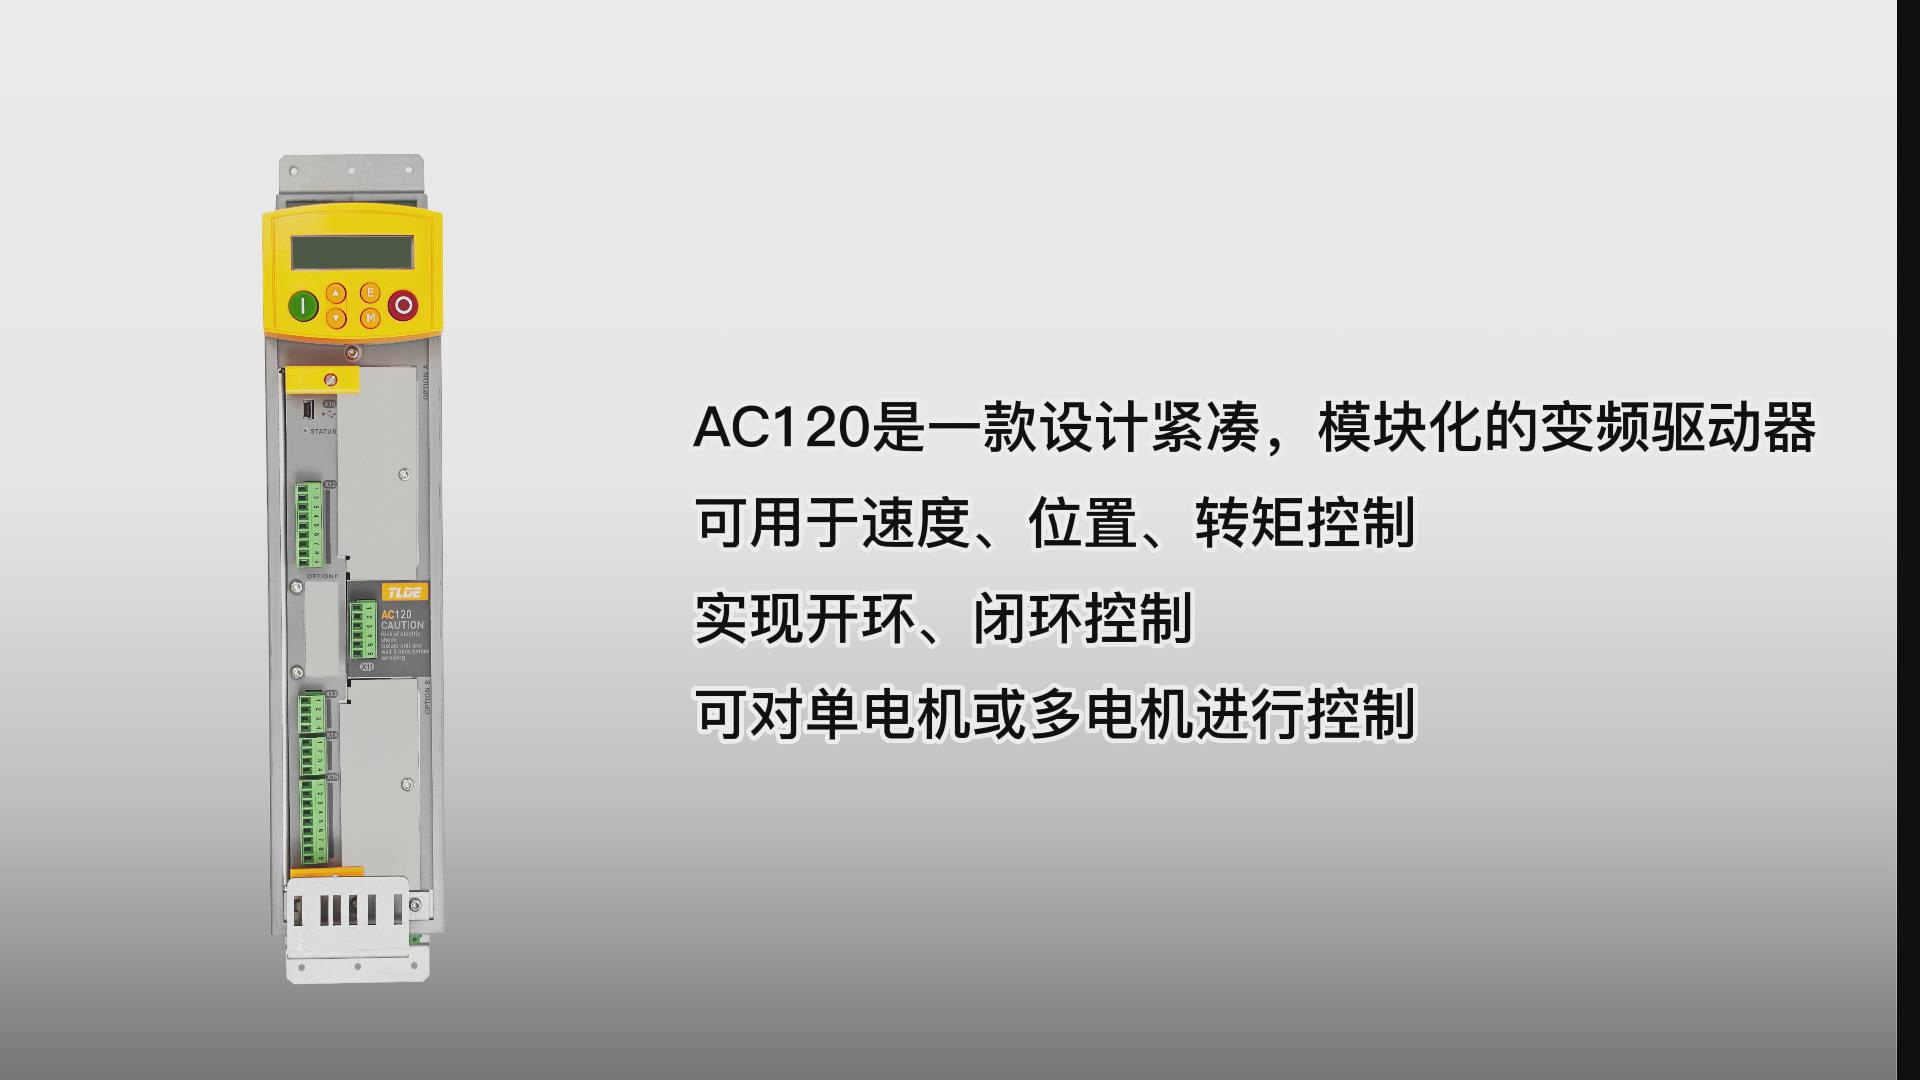 AC120系列变频器 国产模块化变频器驱动器推荐！ 777钱柜机电！